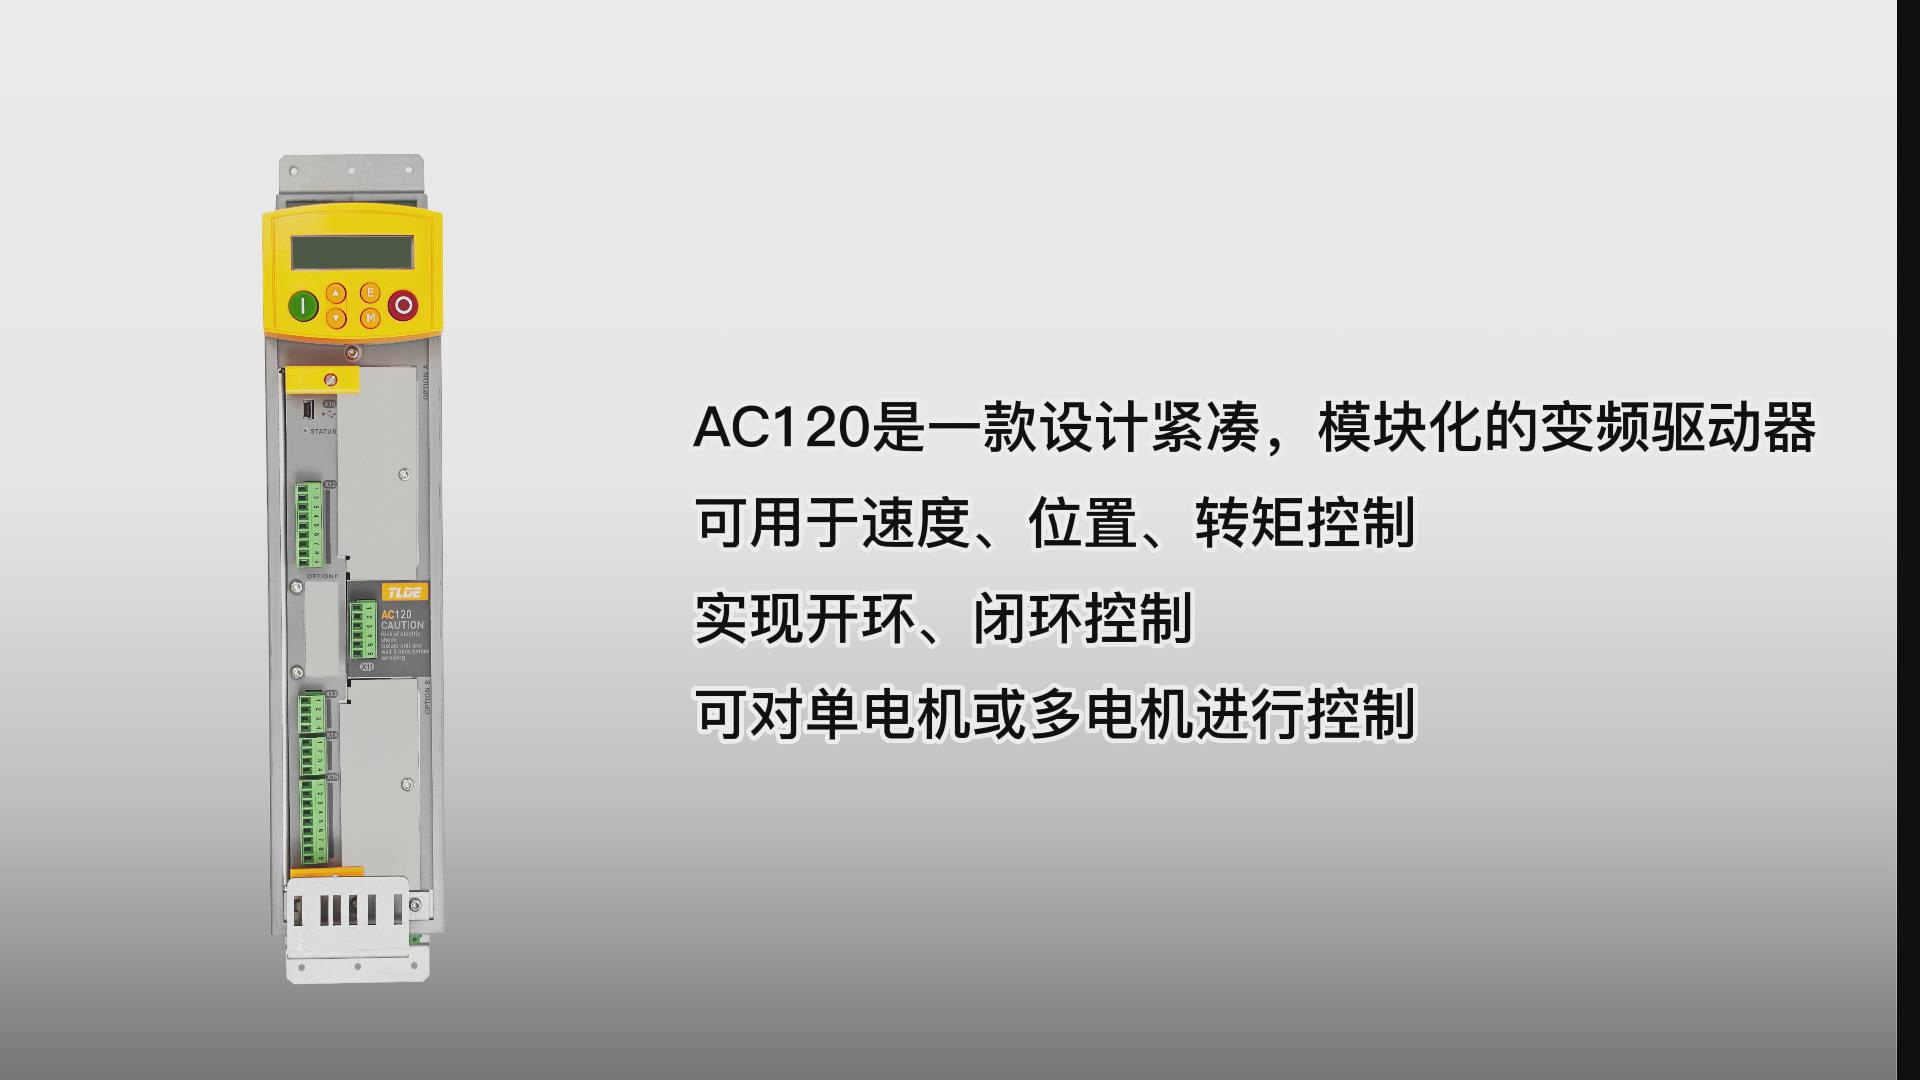 AC120系列变频器 国产模块化变频器驱动器推荐！ 777钱柜机电！